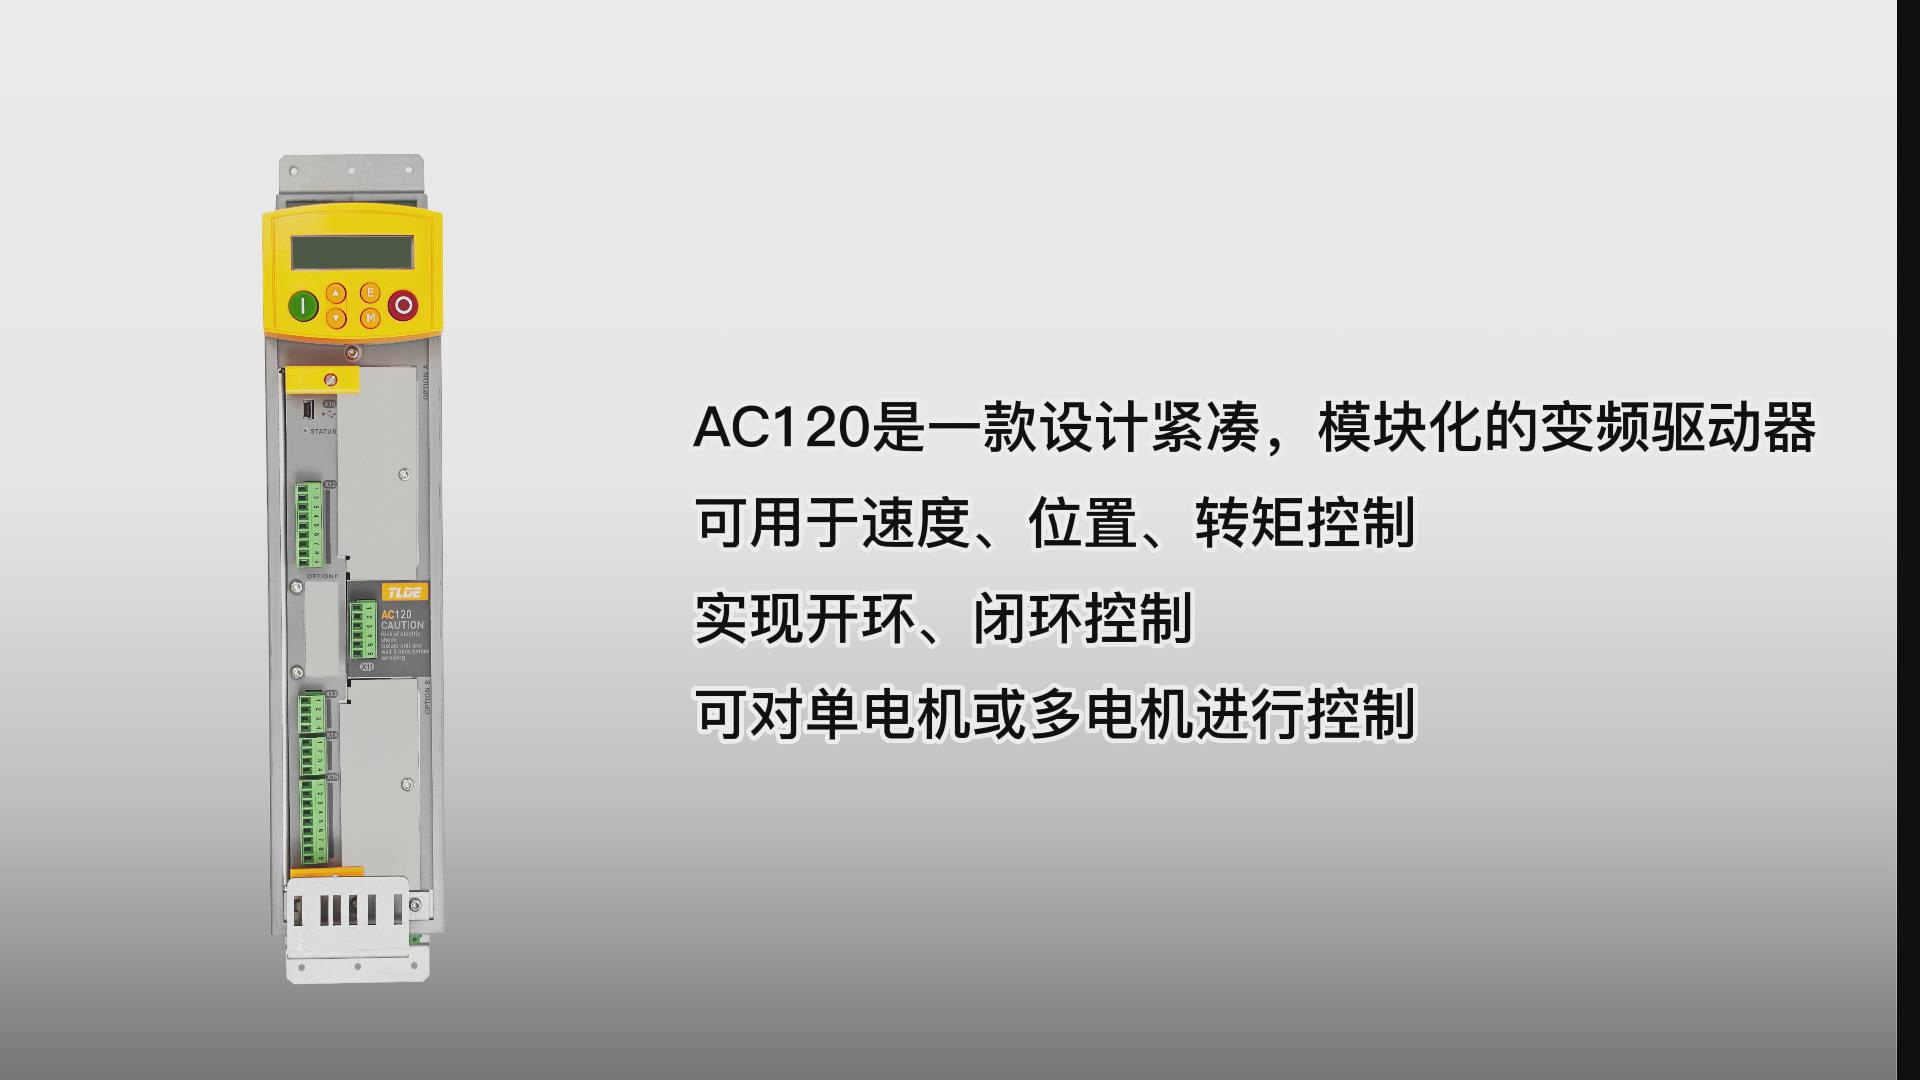 AC120系列变频器 国产模块化变频器驱动器推荐！ 777钱柜机电！